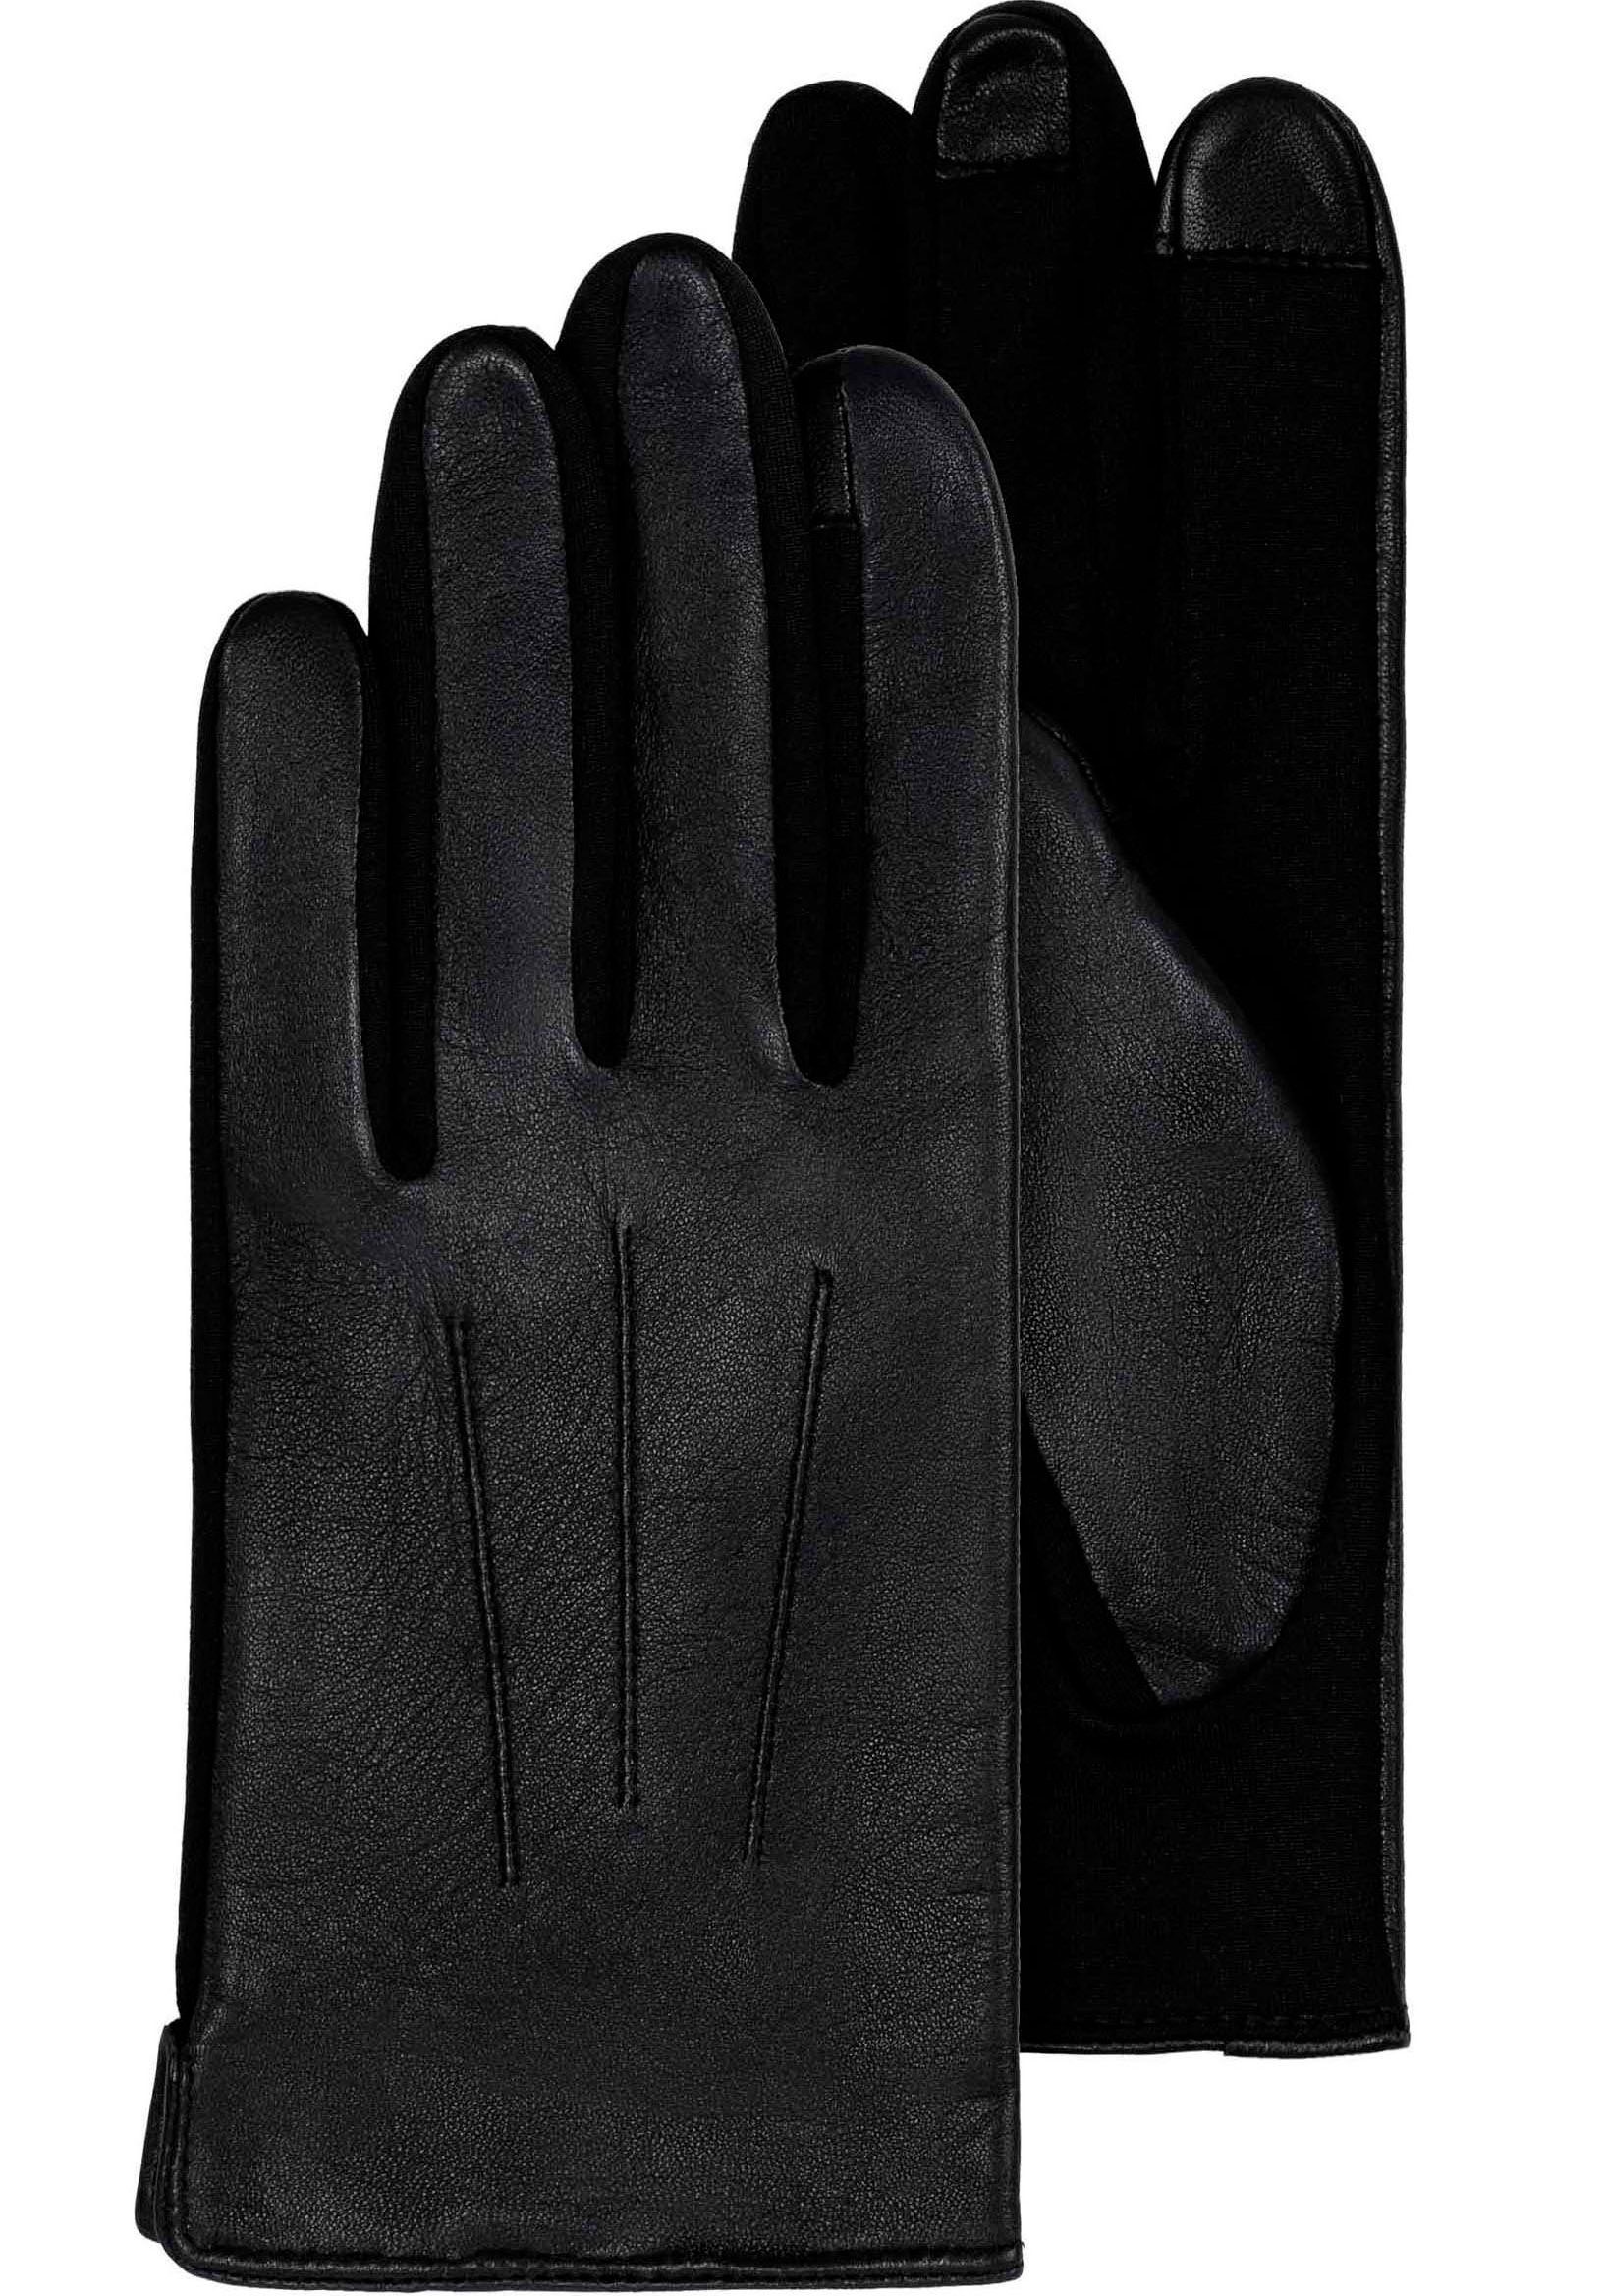 KESSLER Lederhandschuhe Mia Touchfunktion, Stretch, Gummizug am Handgelenk black